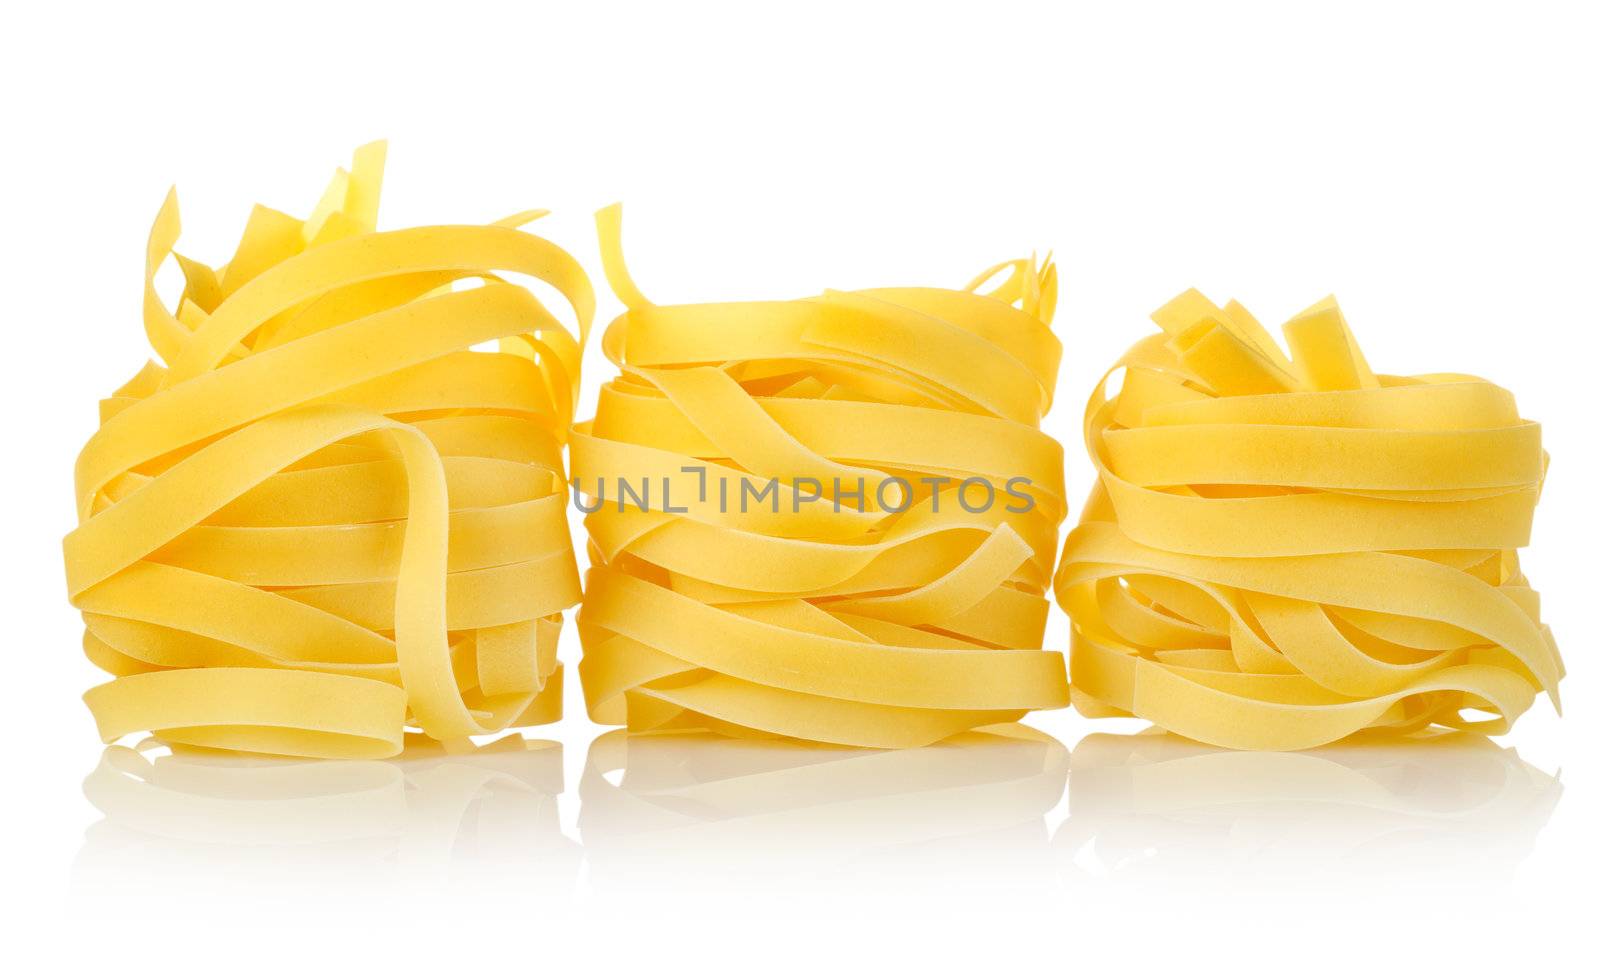 Three pastas tagliatelle isolated on a white background